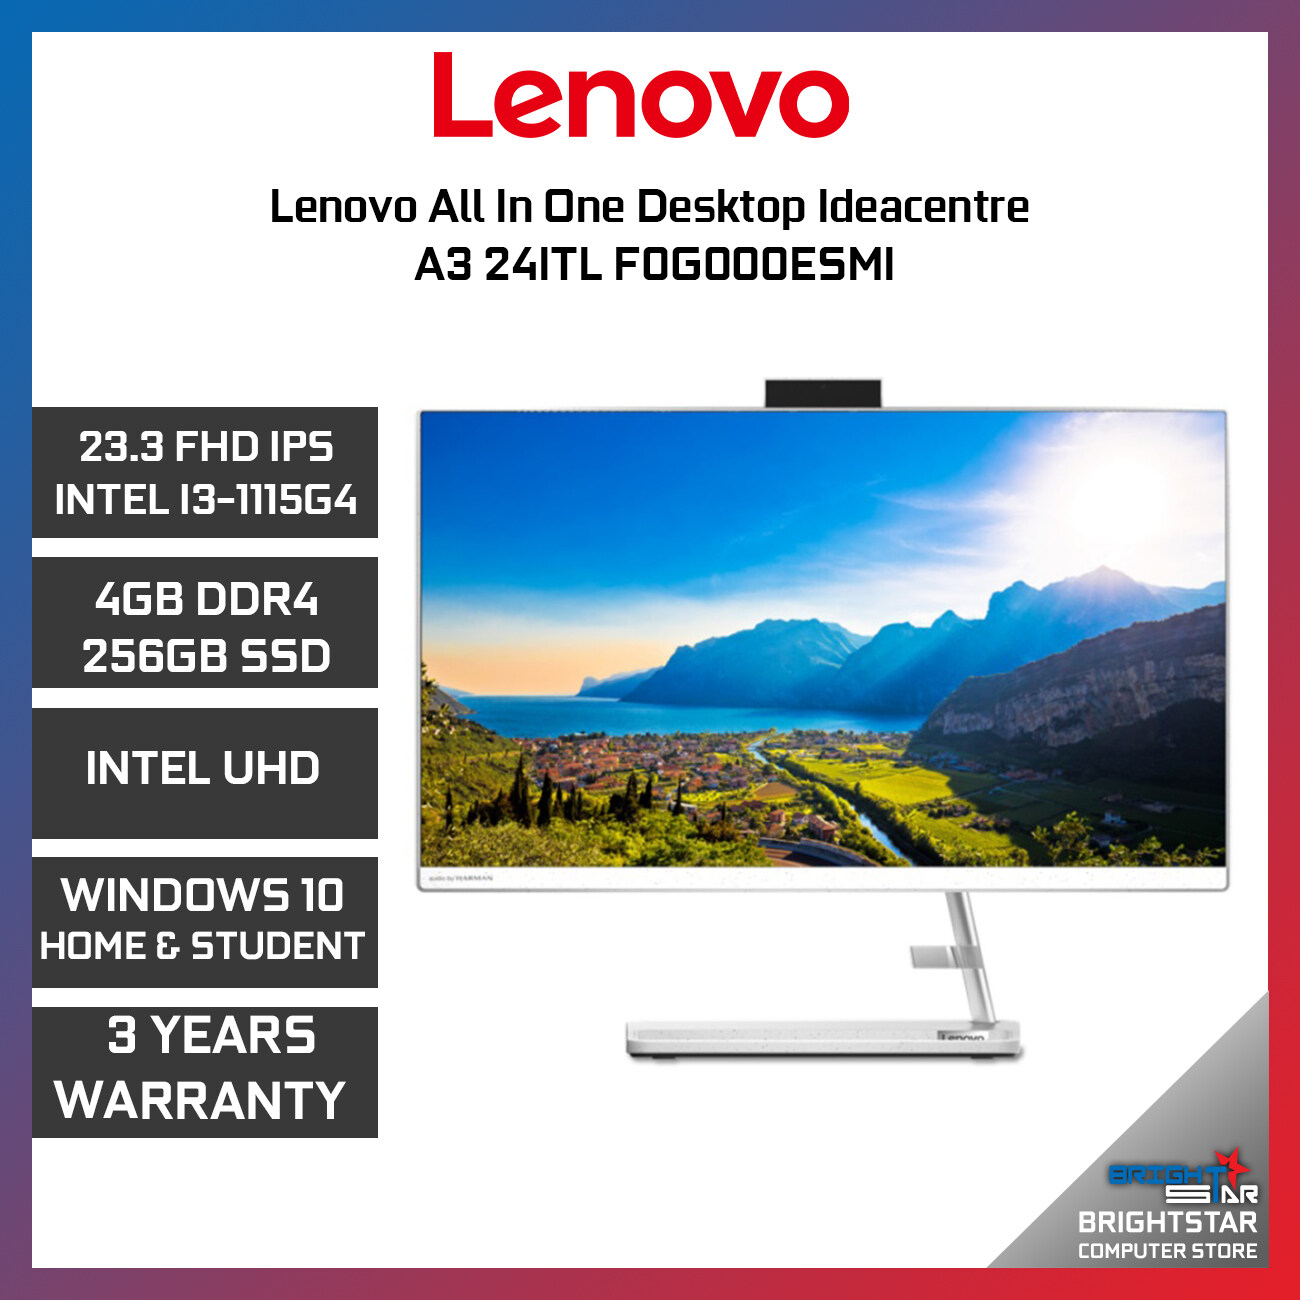 Lenovo All In One Desktop Ideacentre A3 24ITL F0G000ESMI (  FHD IPS /  Intel Core / I3 1115G4 / 4GB Ram / 256GB SSD / Intel UHD Graphic / Windows  10 +